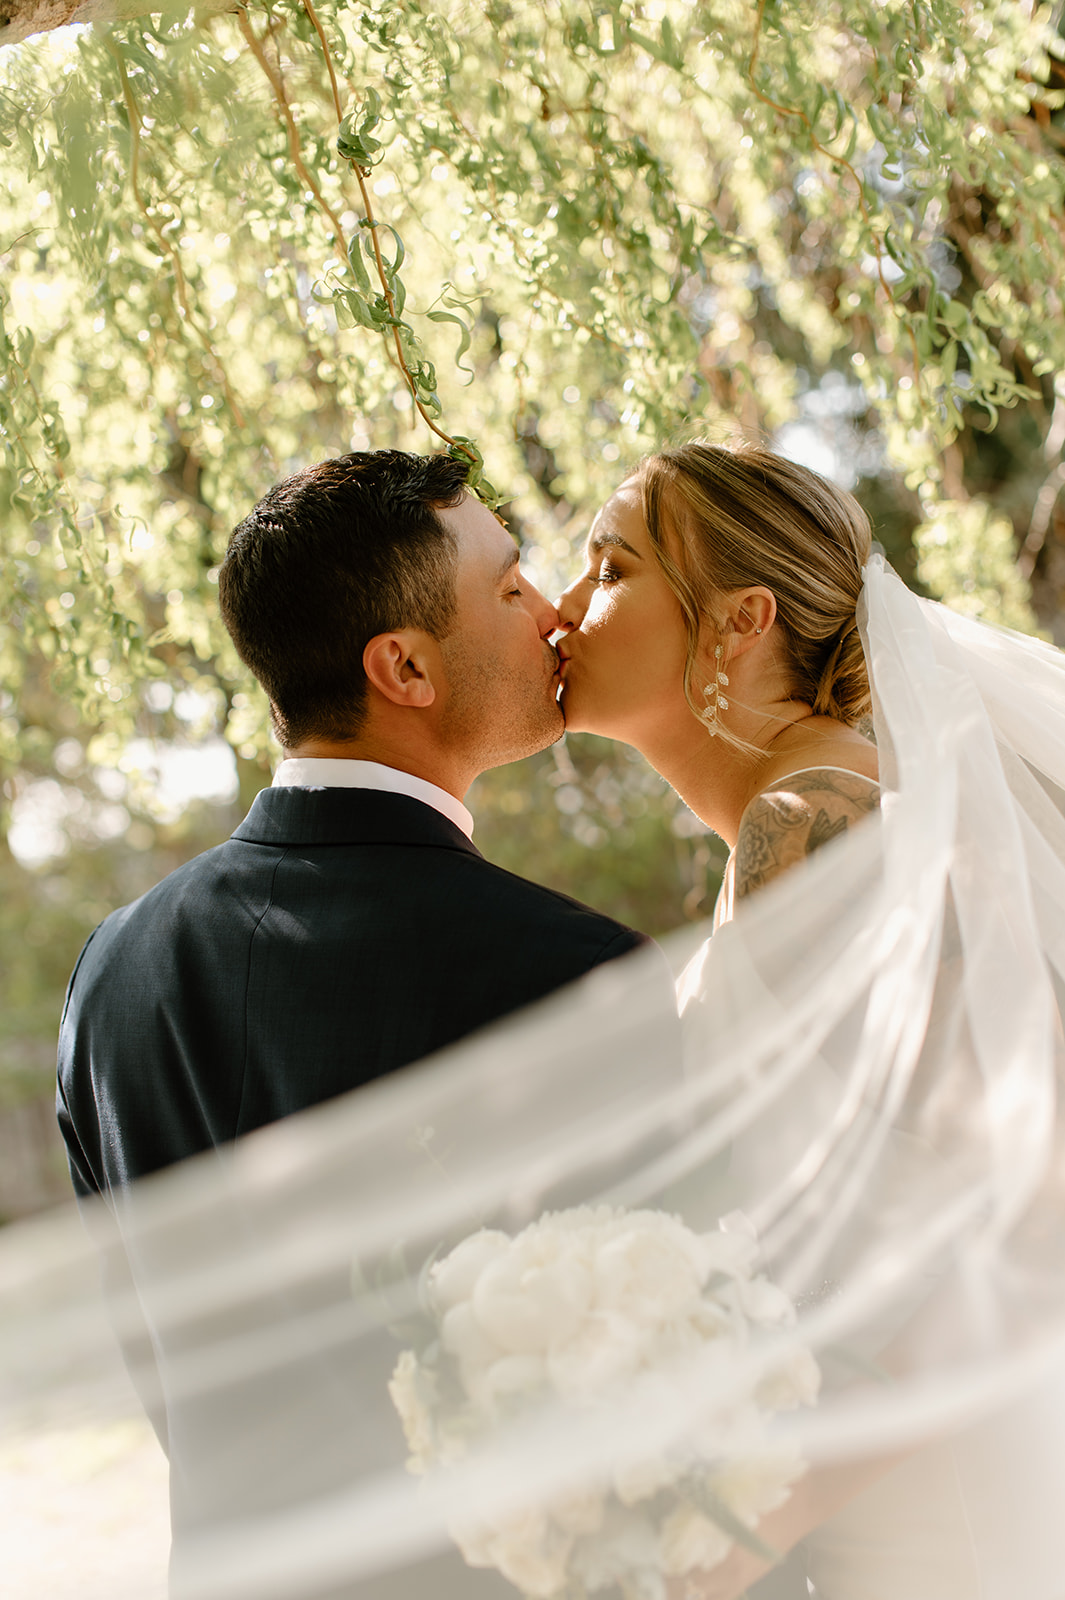 Sydney Jai Photography - Sonoma County wedding photography, bride and groom photos